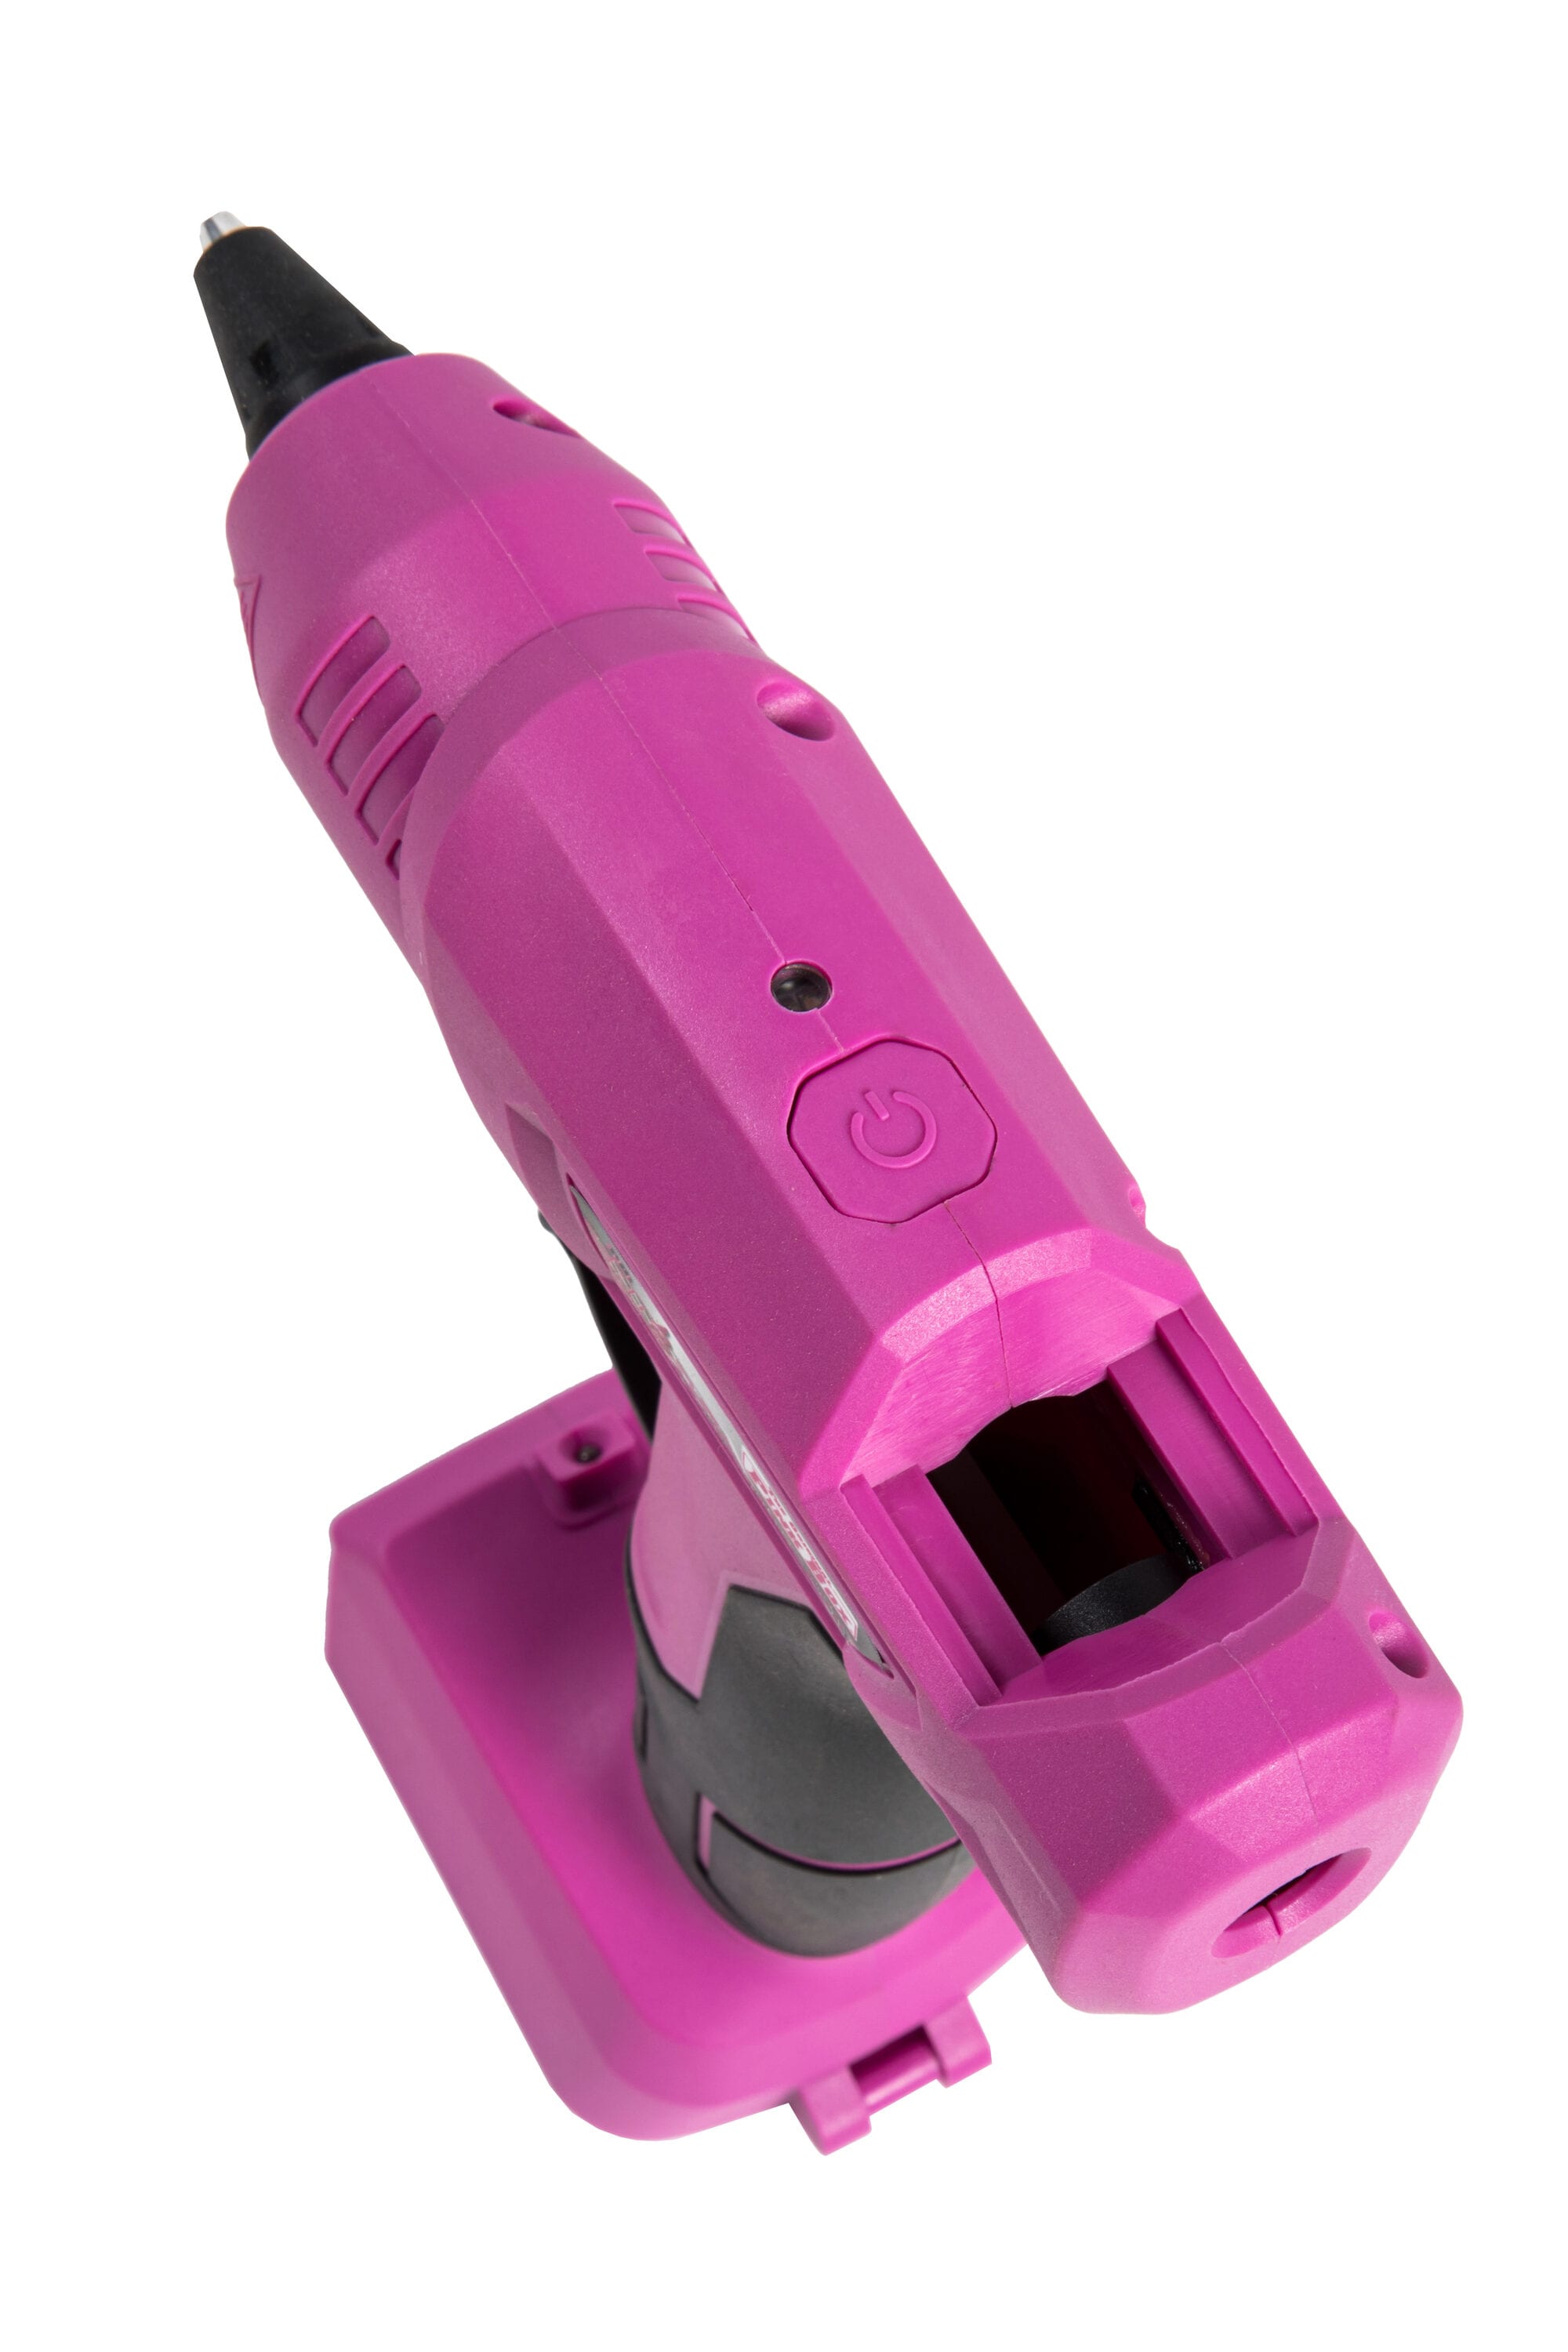 Hot Glue Gun, 20V Pink Cordless Glue Gun With 30 PCS Full Size Glue Sticks,  2Ah Rechargeable Battery Glue Gun Kit For DIY, Arts & Craft, Decorations,  Christmas Gift For Women